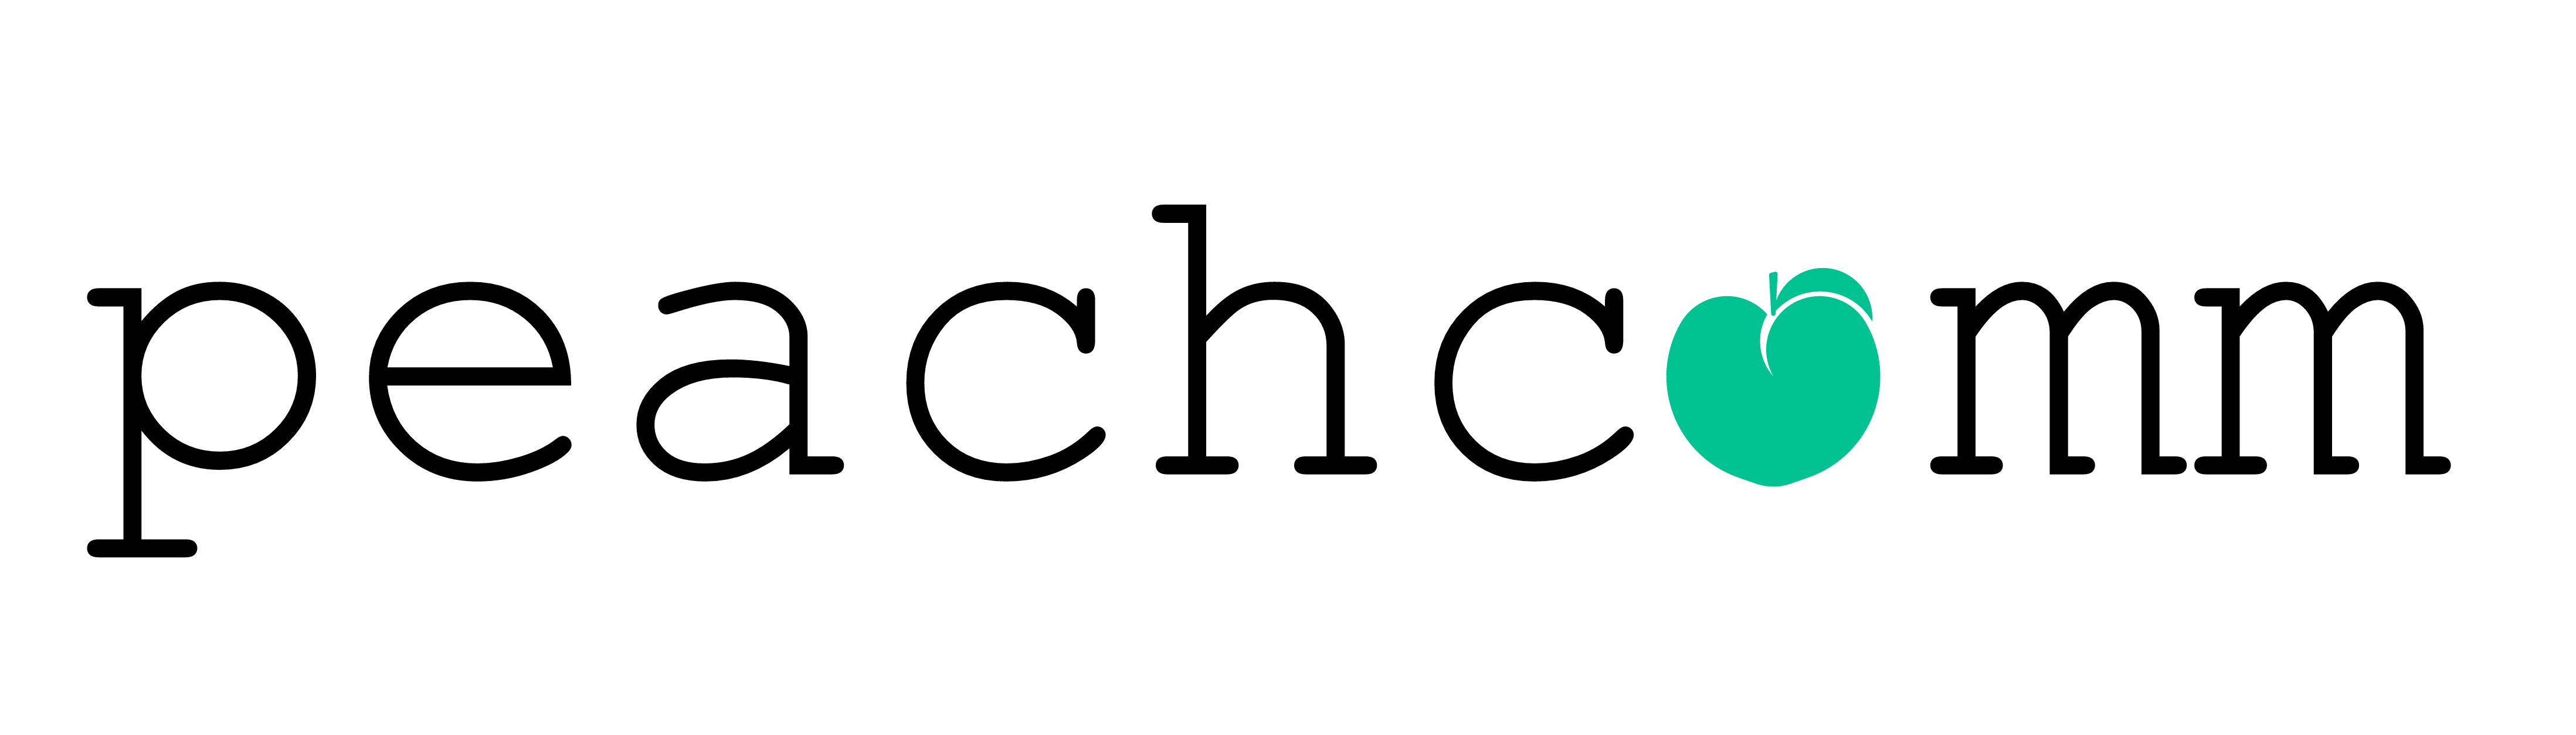 peachcmm_logo